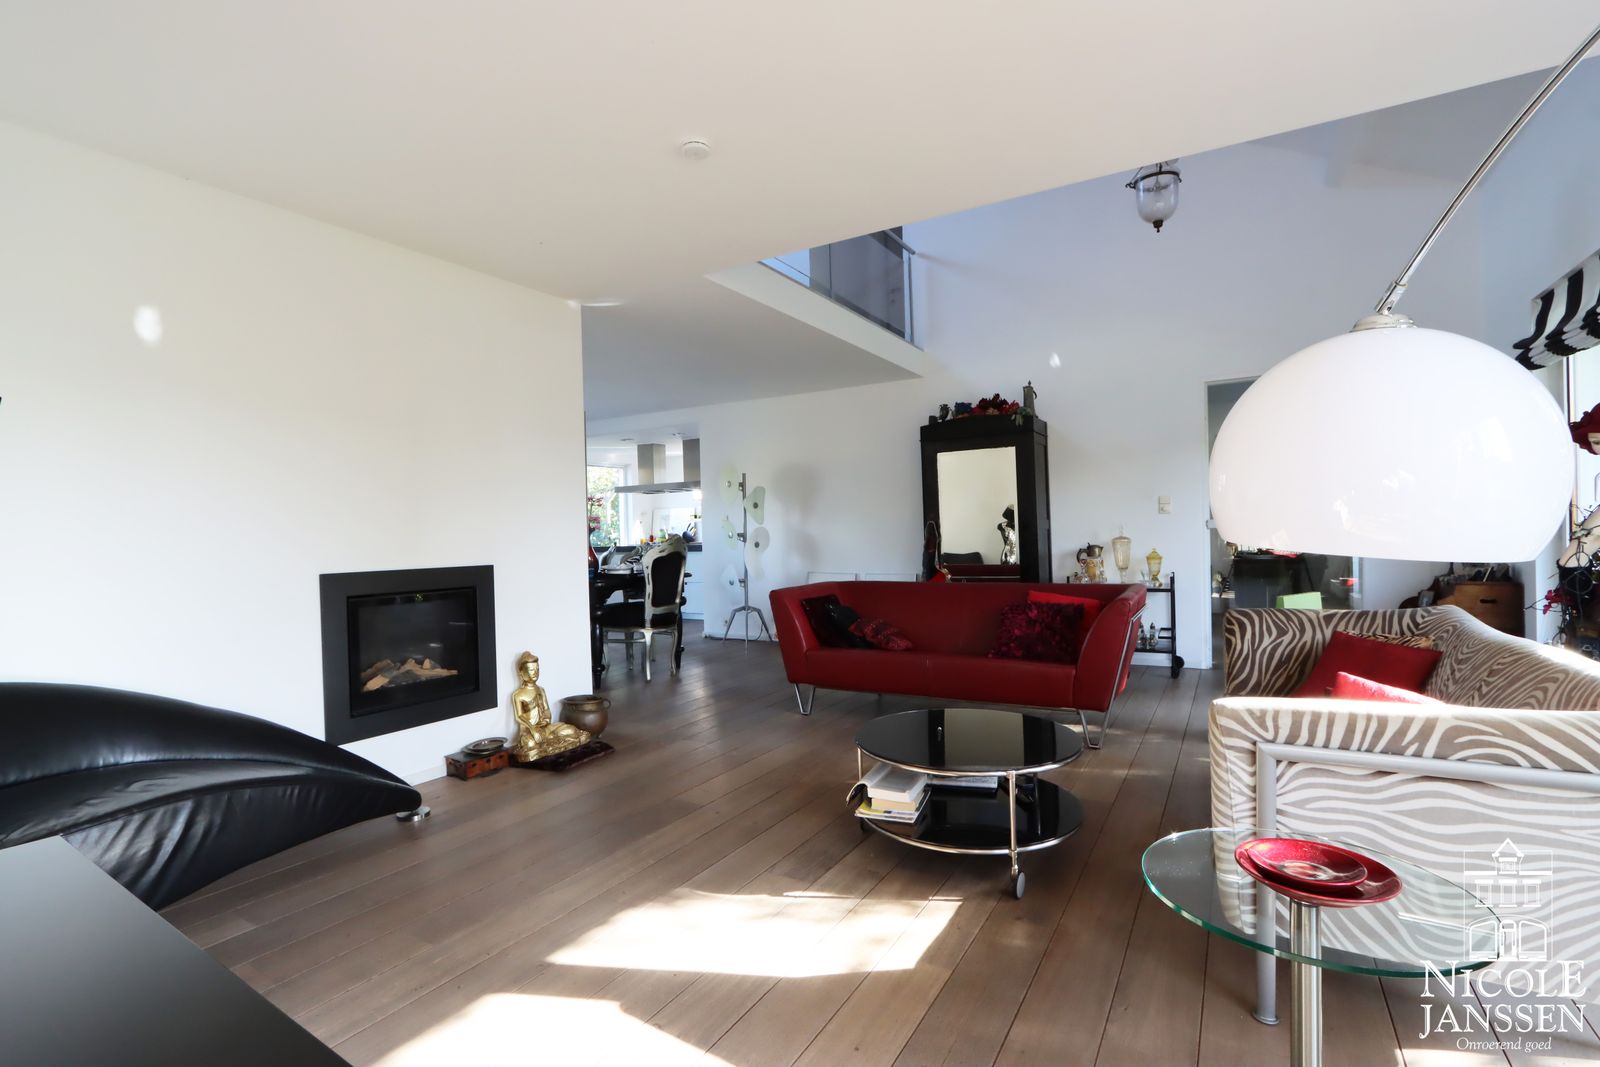 6 Nicole Janssen huis te koop Molenbeersel Venderstraat 5D (salon).jpg